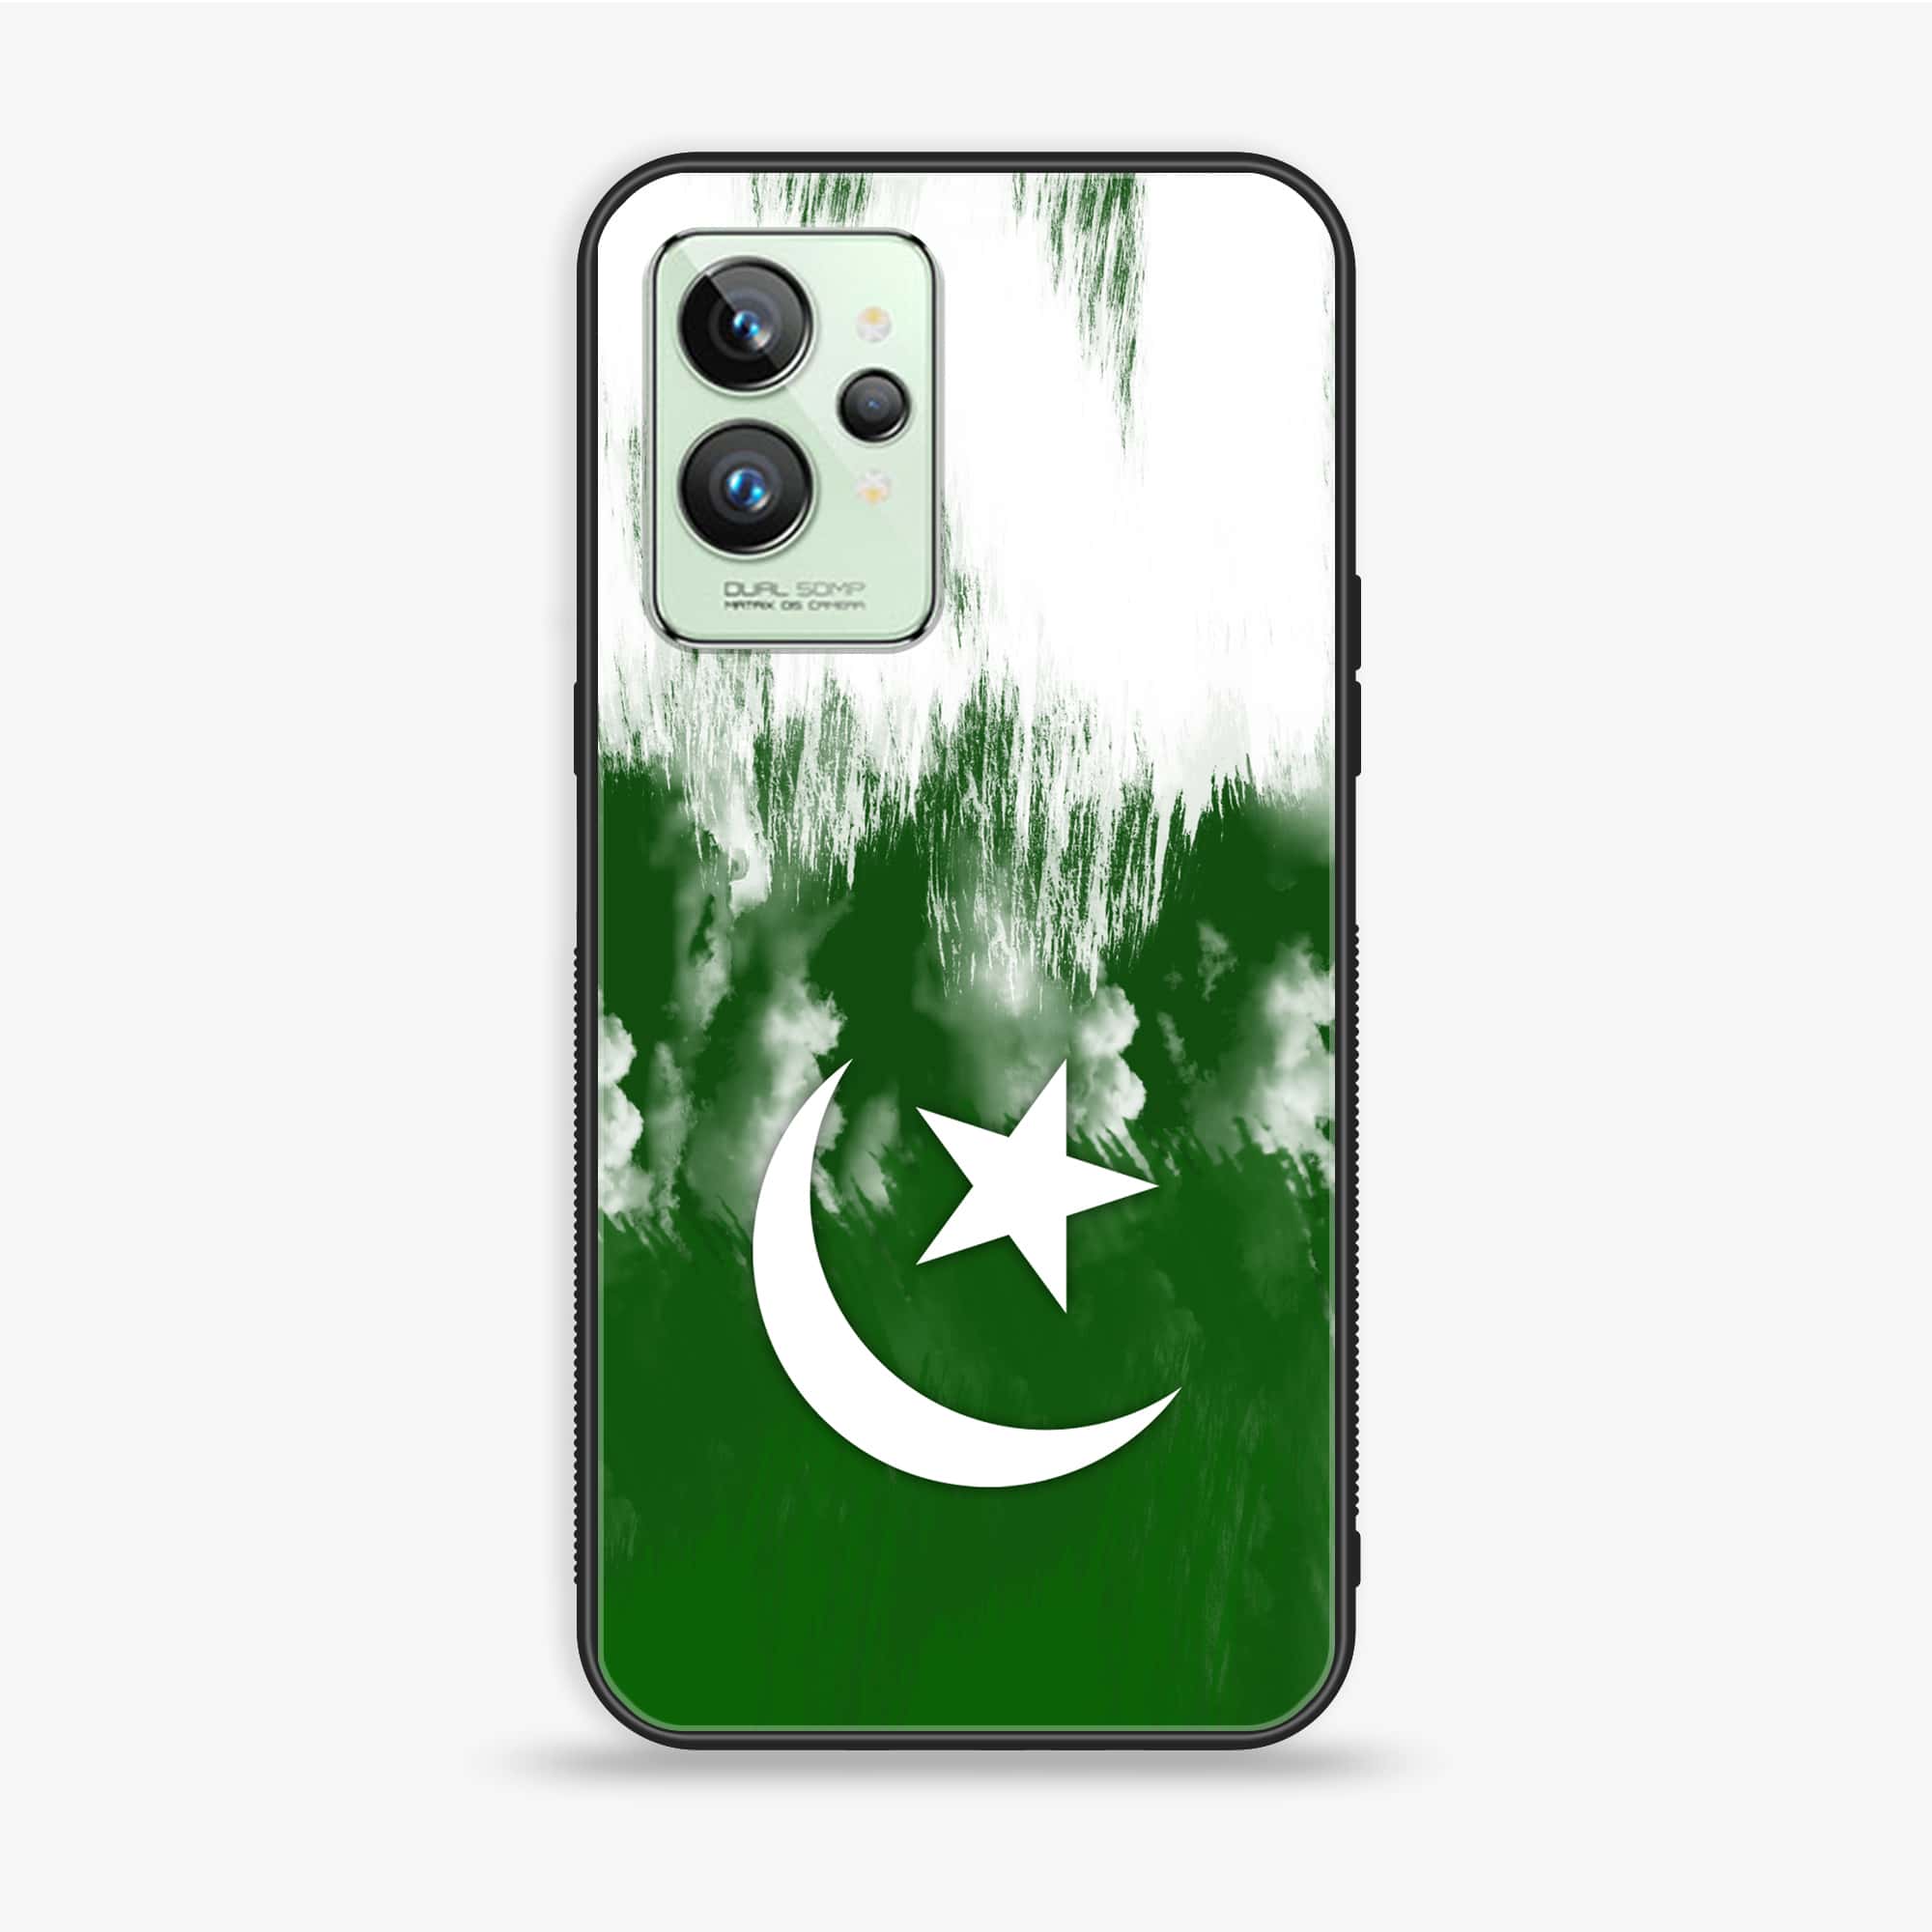 Realme GT 2 Pro - Pakistani Flag Series - Premium Printed Glass soft Bumper shock Proof Case